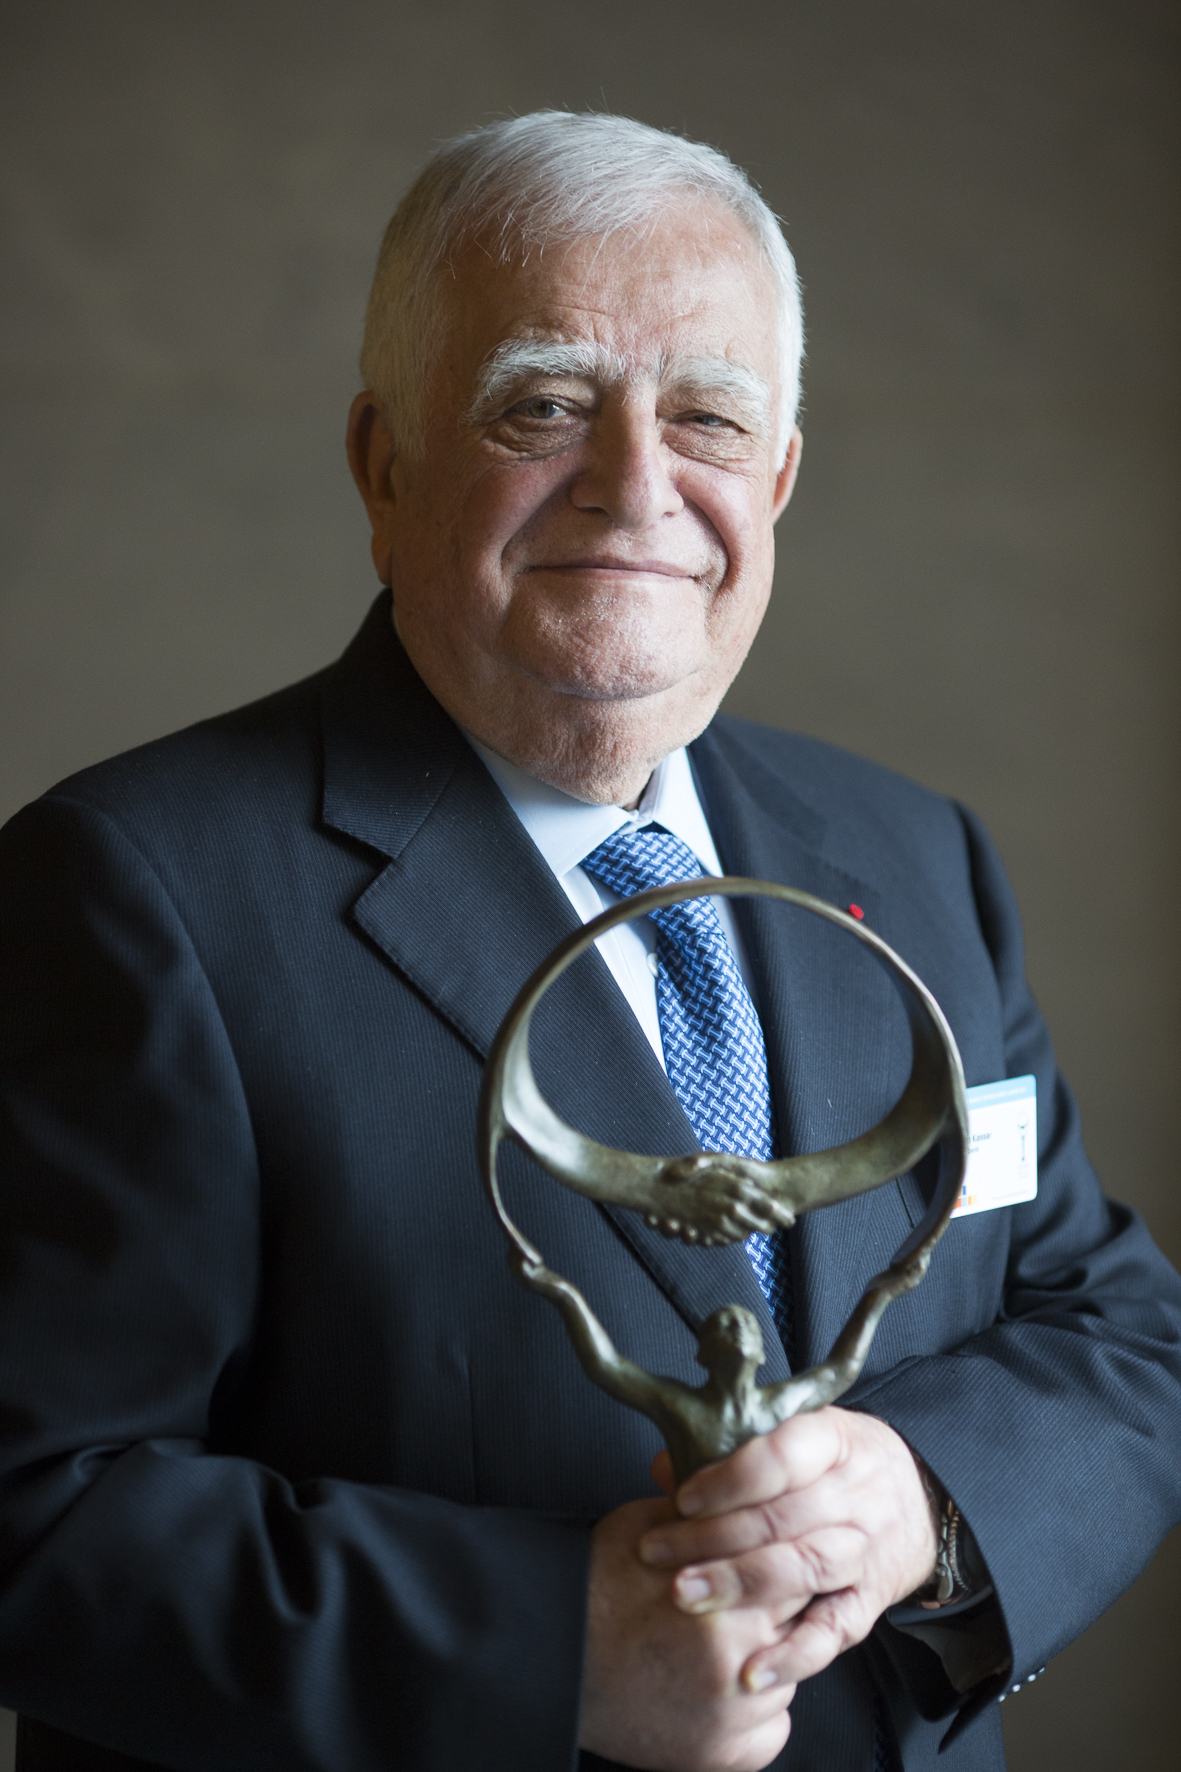 Adnan Kassar - 2014 Oslo Business for Peace Award Honouree